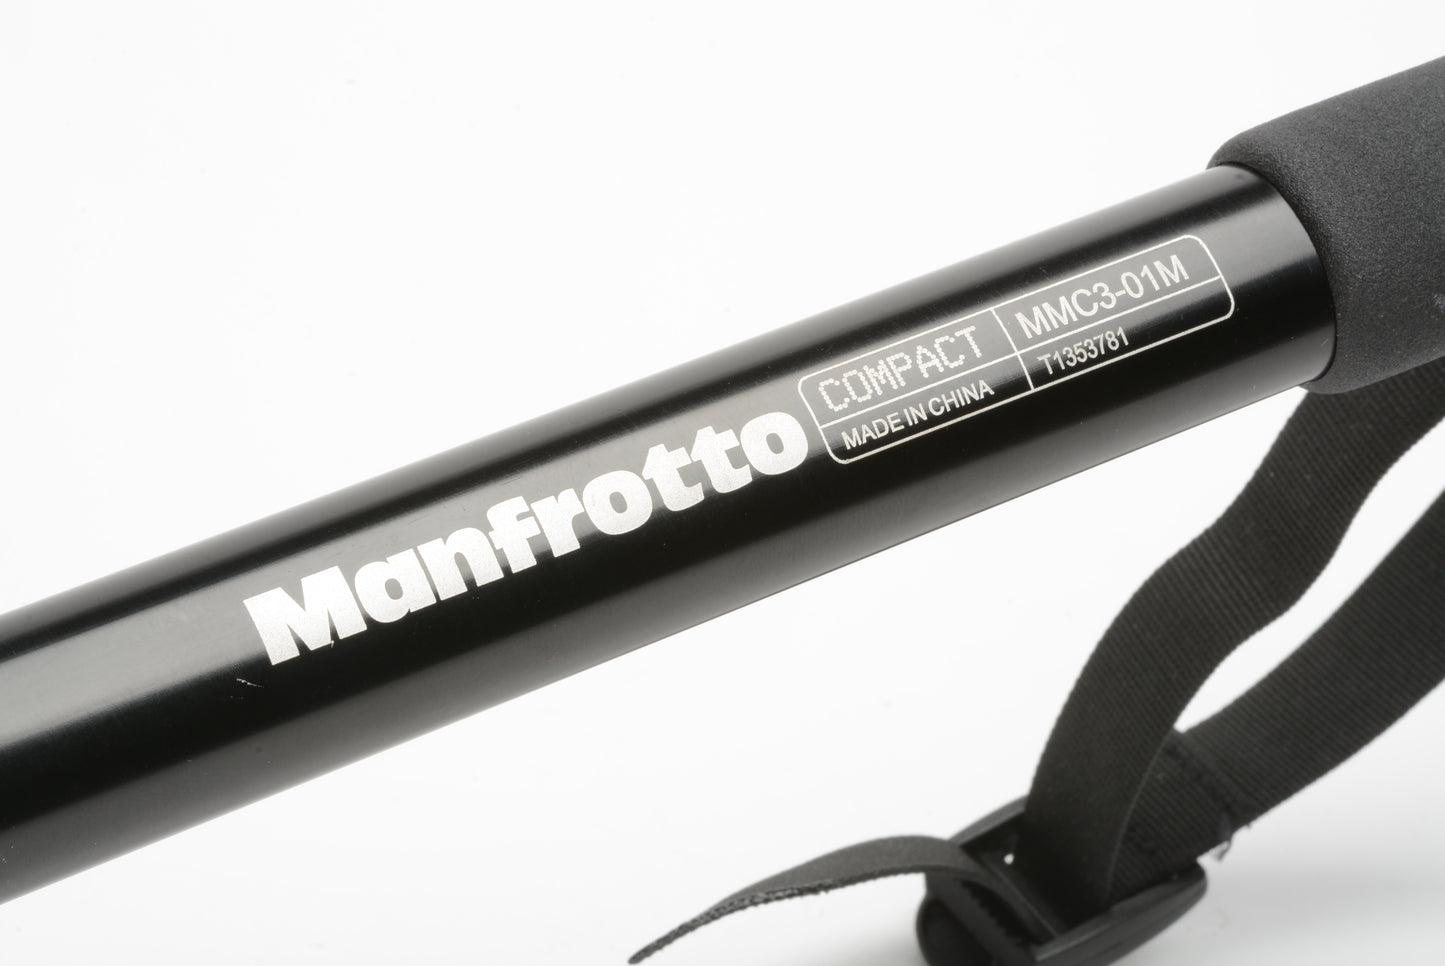 Manfrotto MMC3-01M Compact monopod 15" folded, very nice